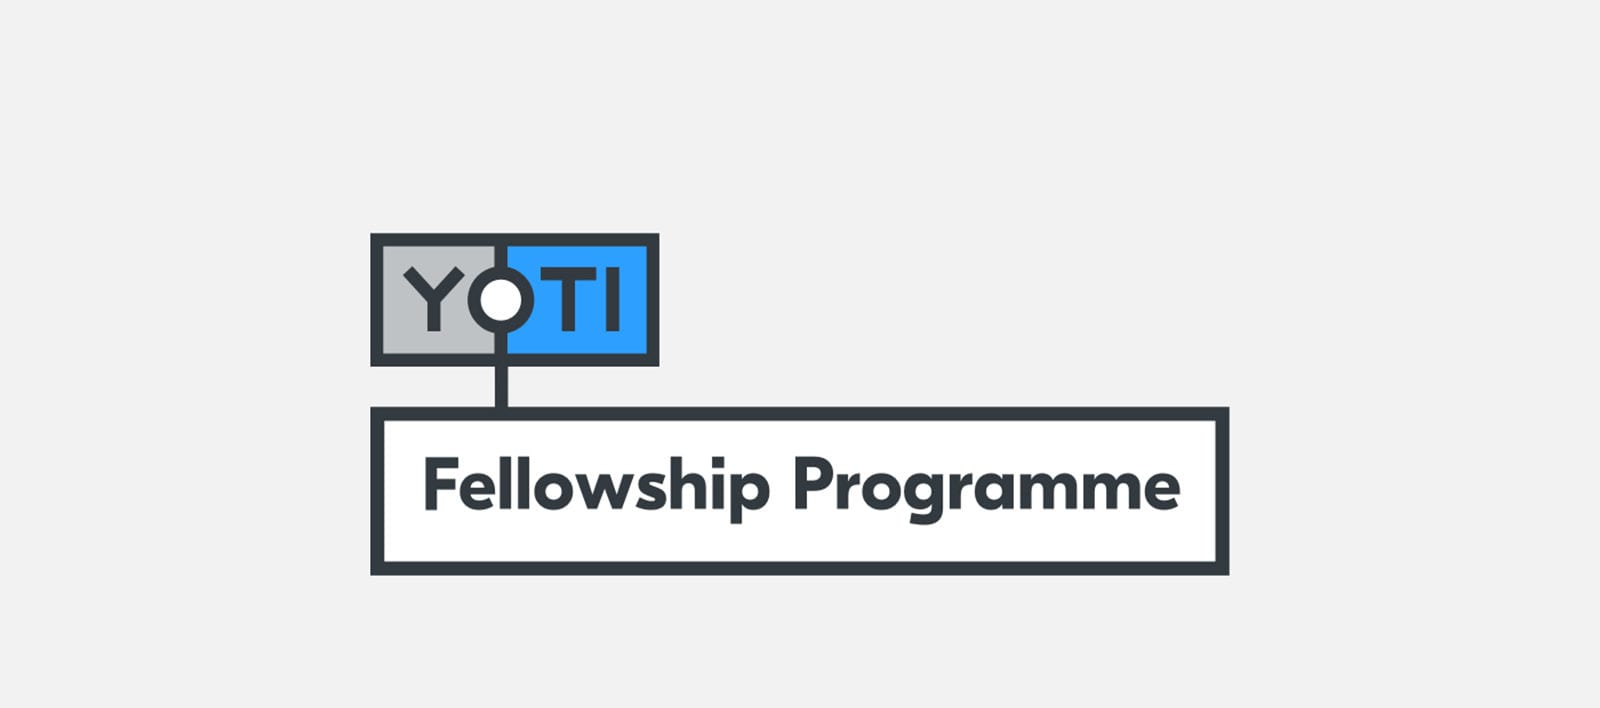 Announcing the Yoti Fellowship Programme